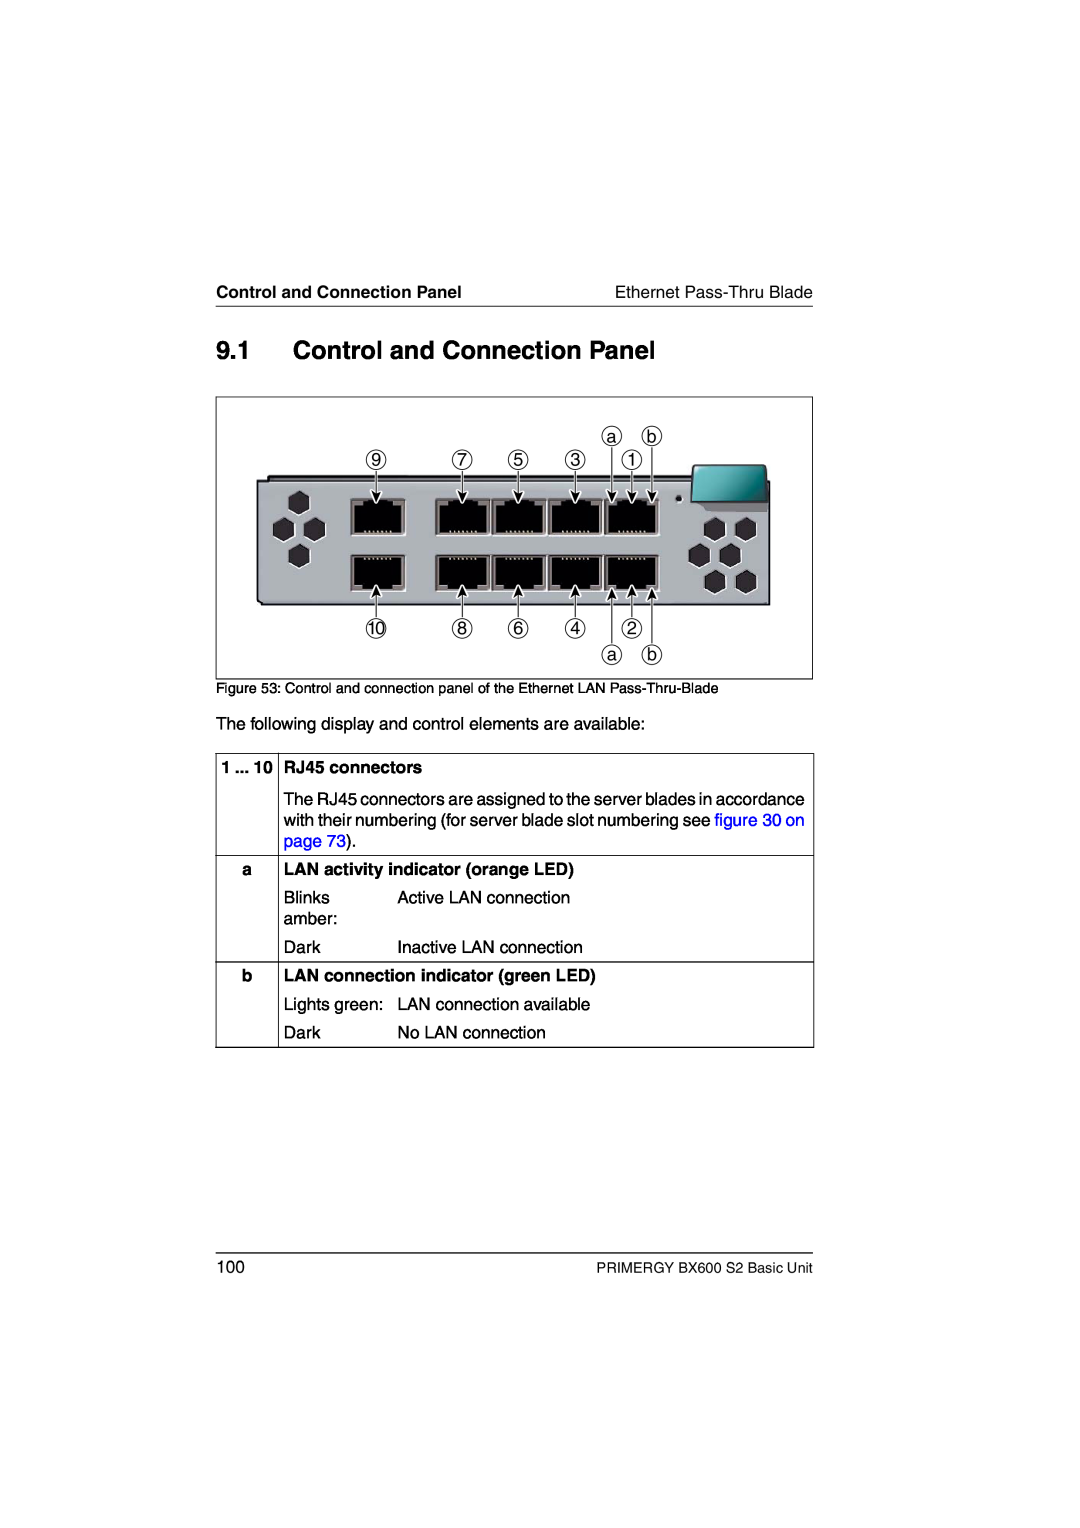 Fujitsu BX600 S2 manual Control and Connection Panel, RJ45 connectors, LAN activity indicator orange LED 